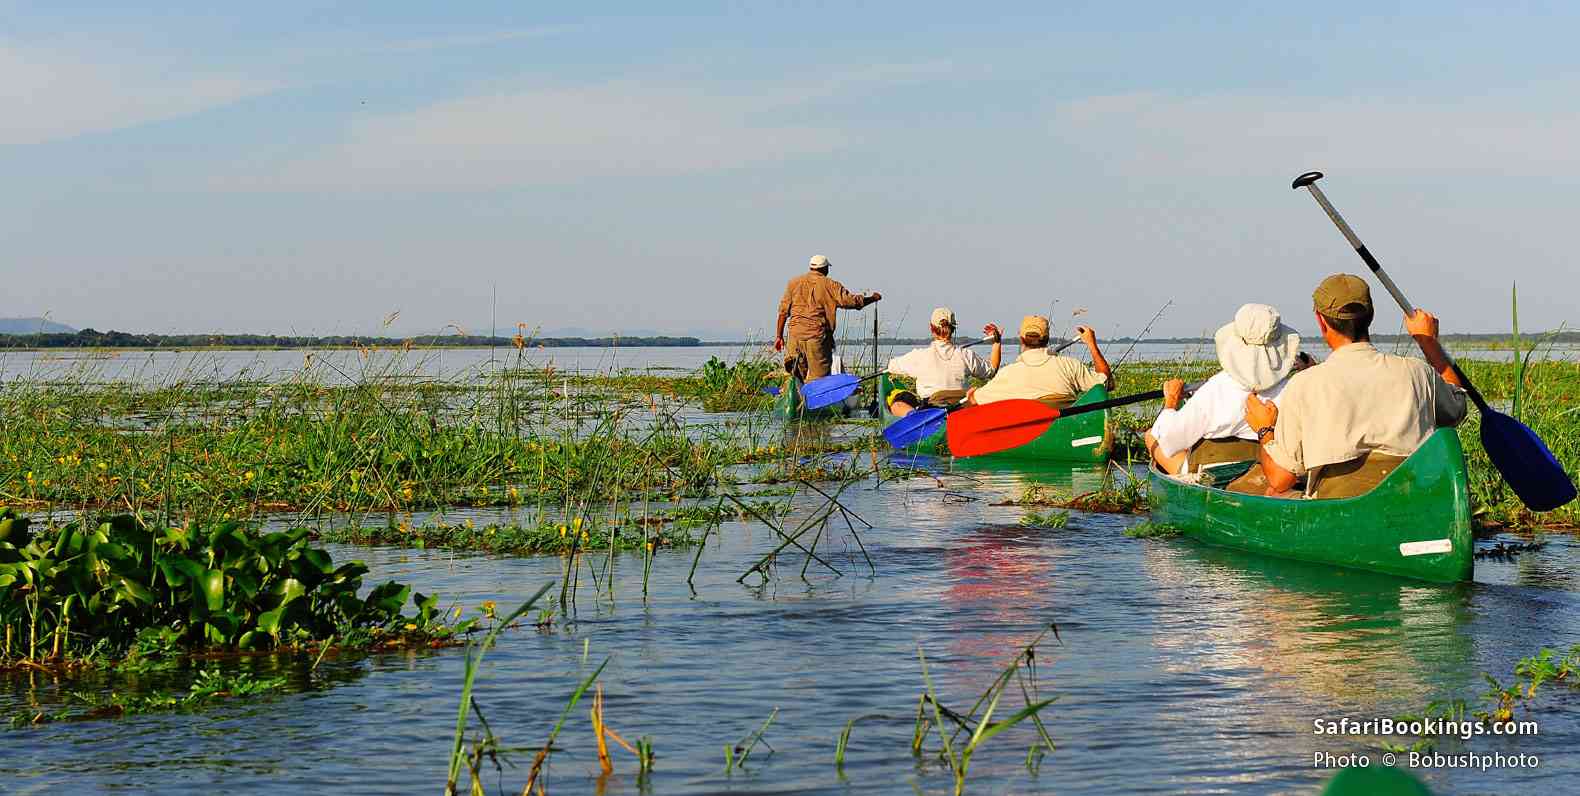 Canoeing down the Zambezi River